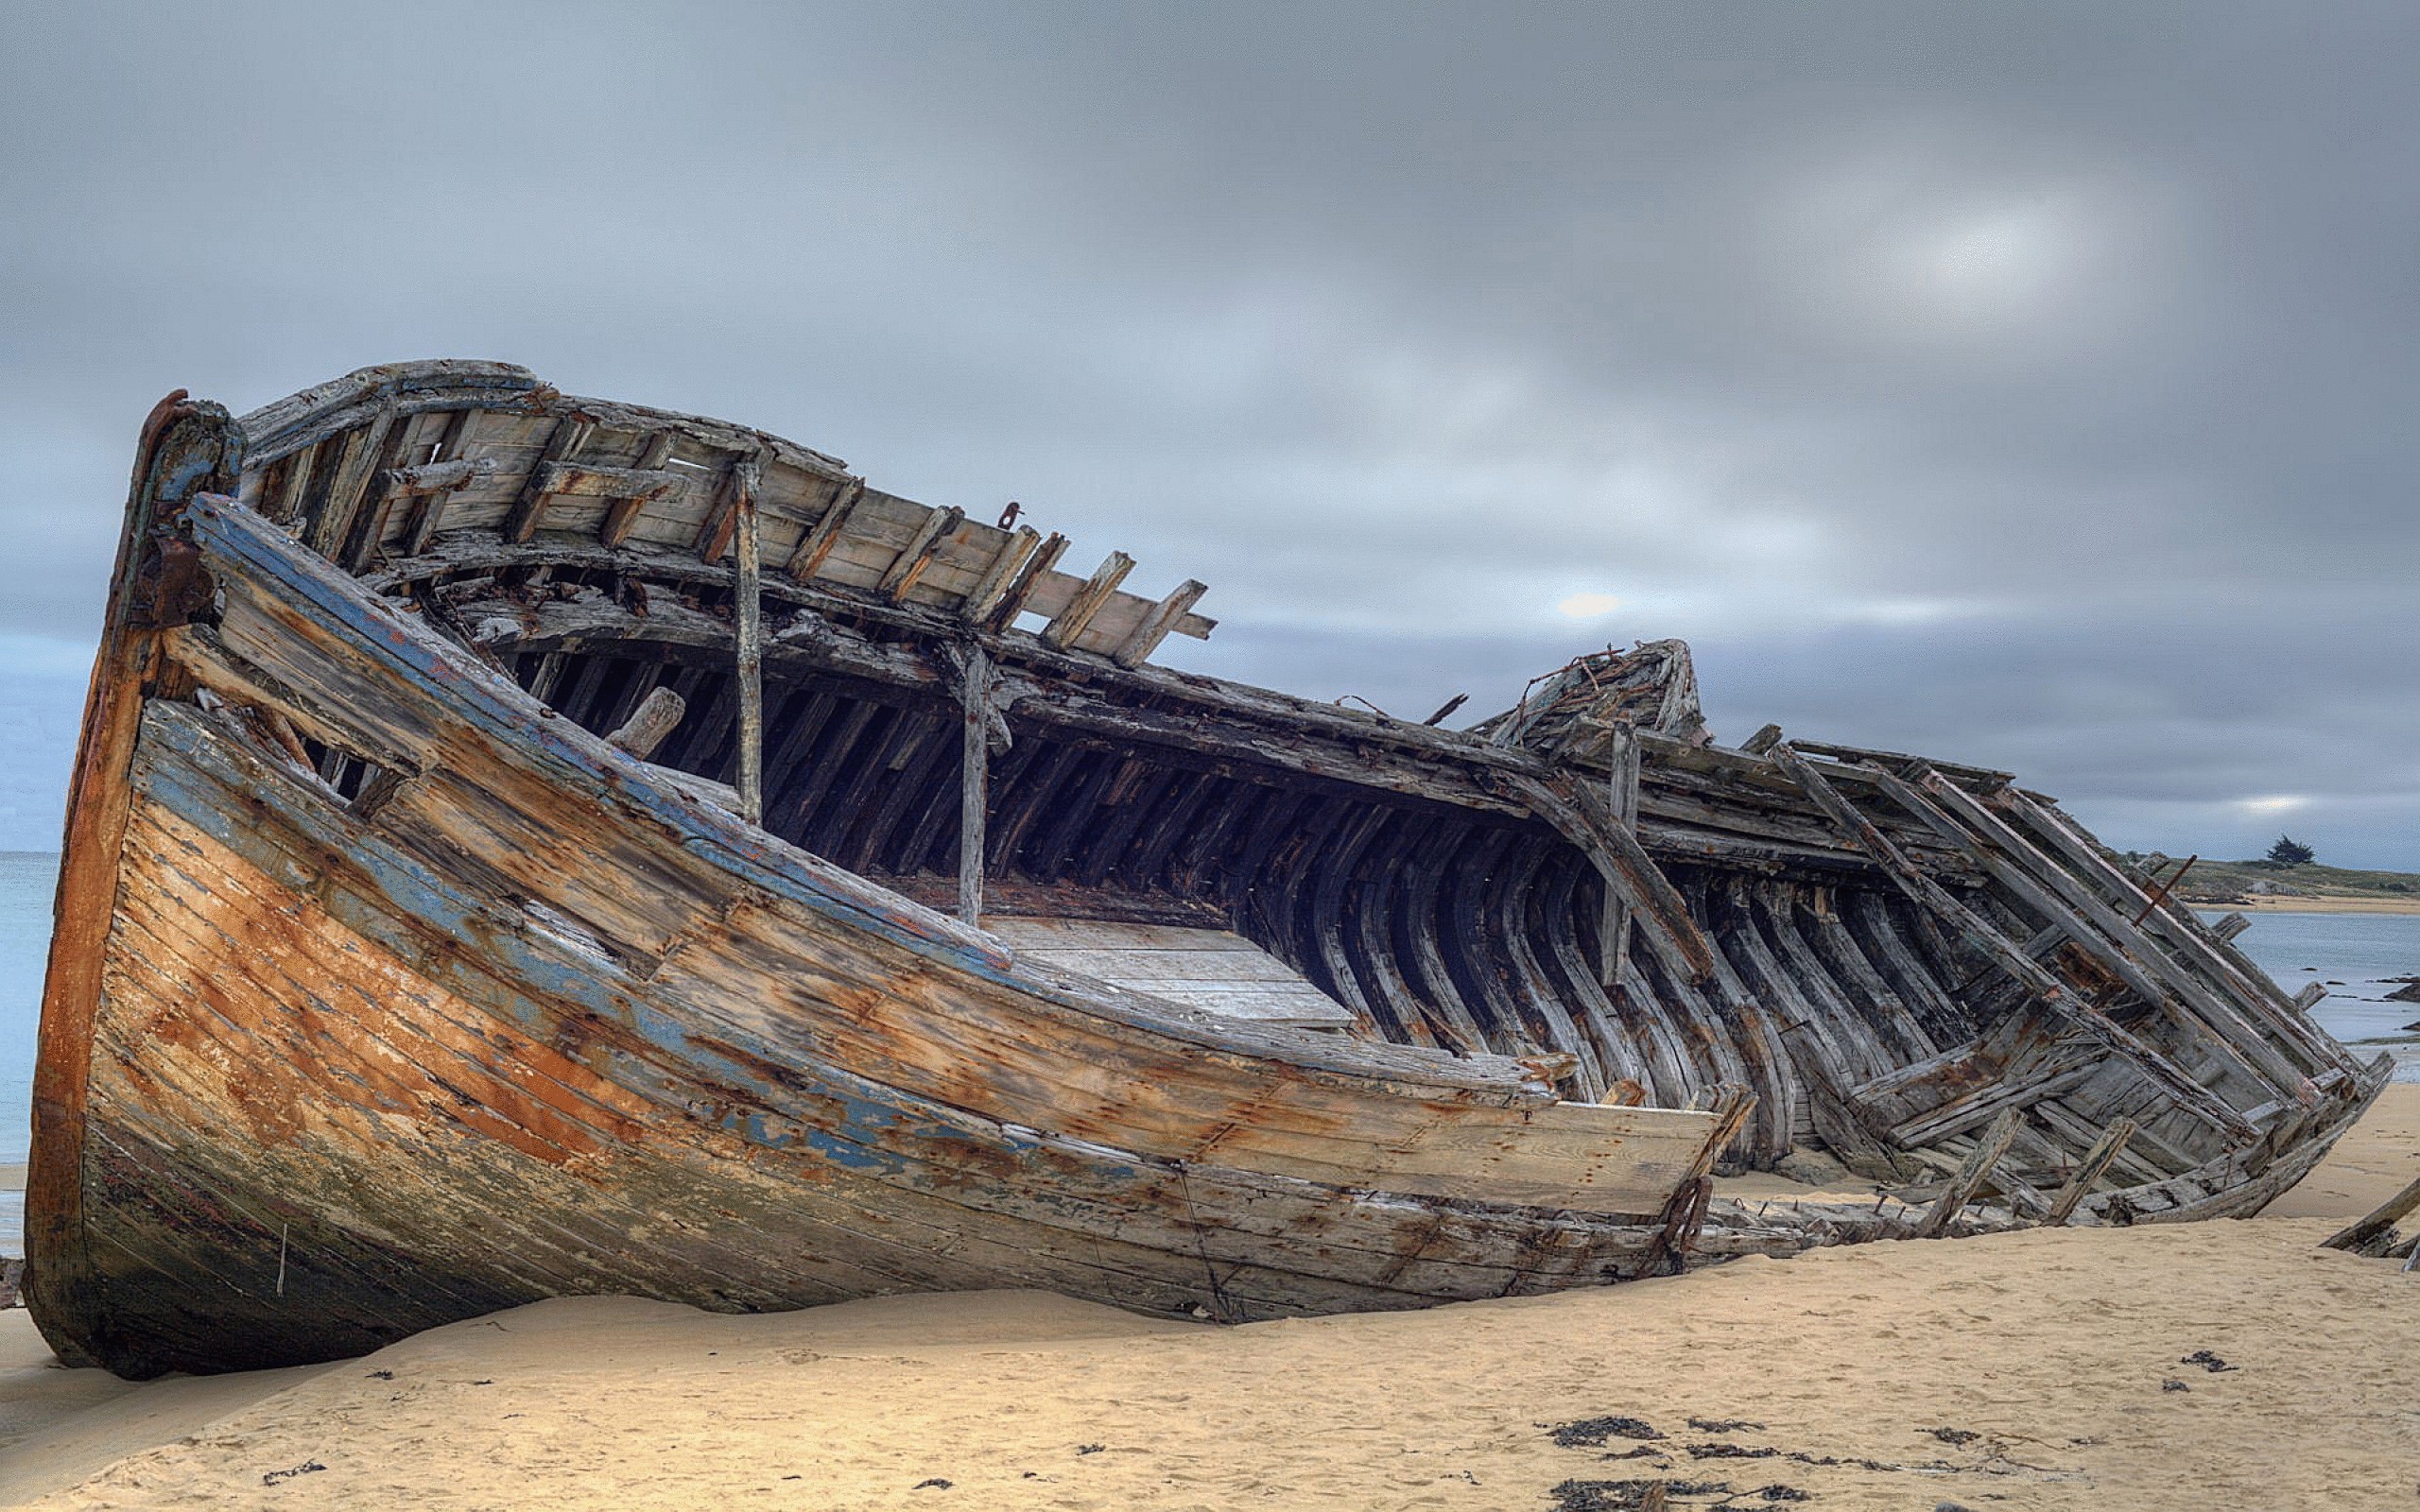 Broken century. Кладбище кораблей Мурманск. Затонувший деревянный корабль. Разбитый корабль. Старый корабль.